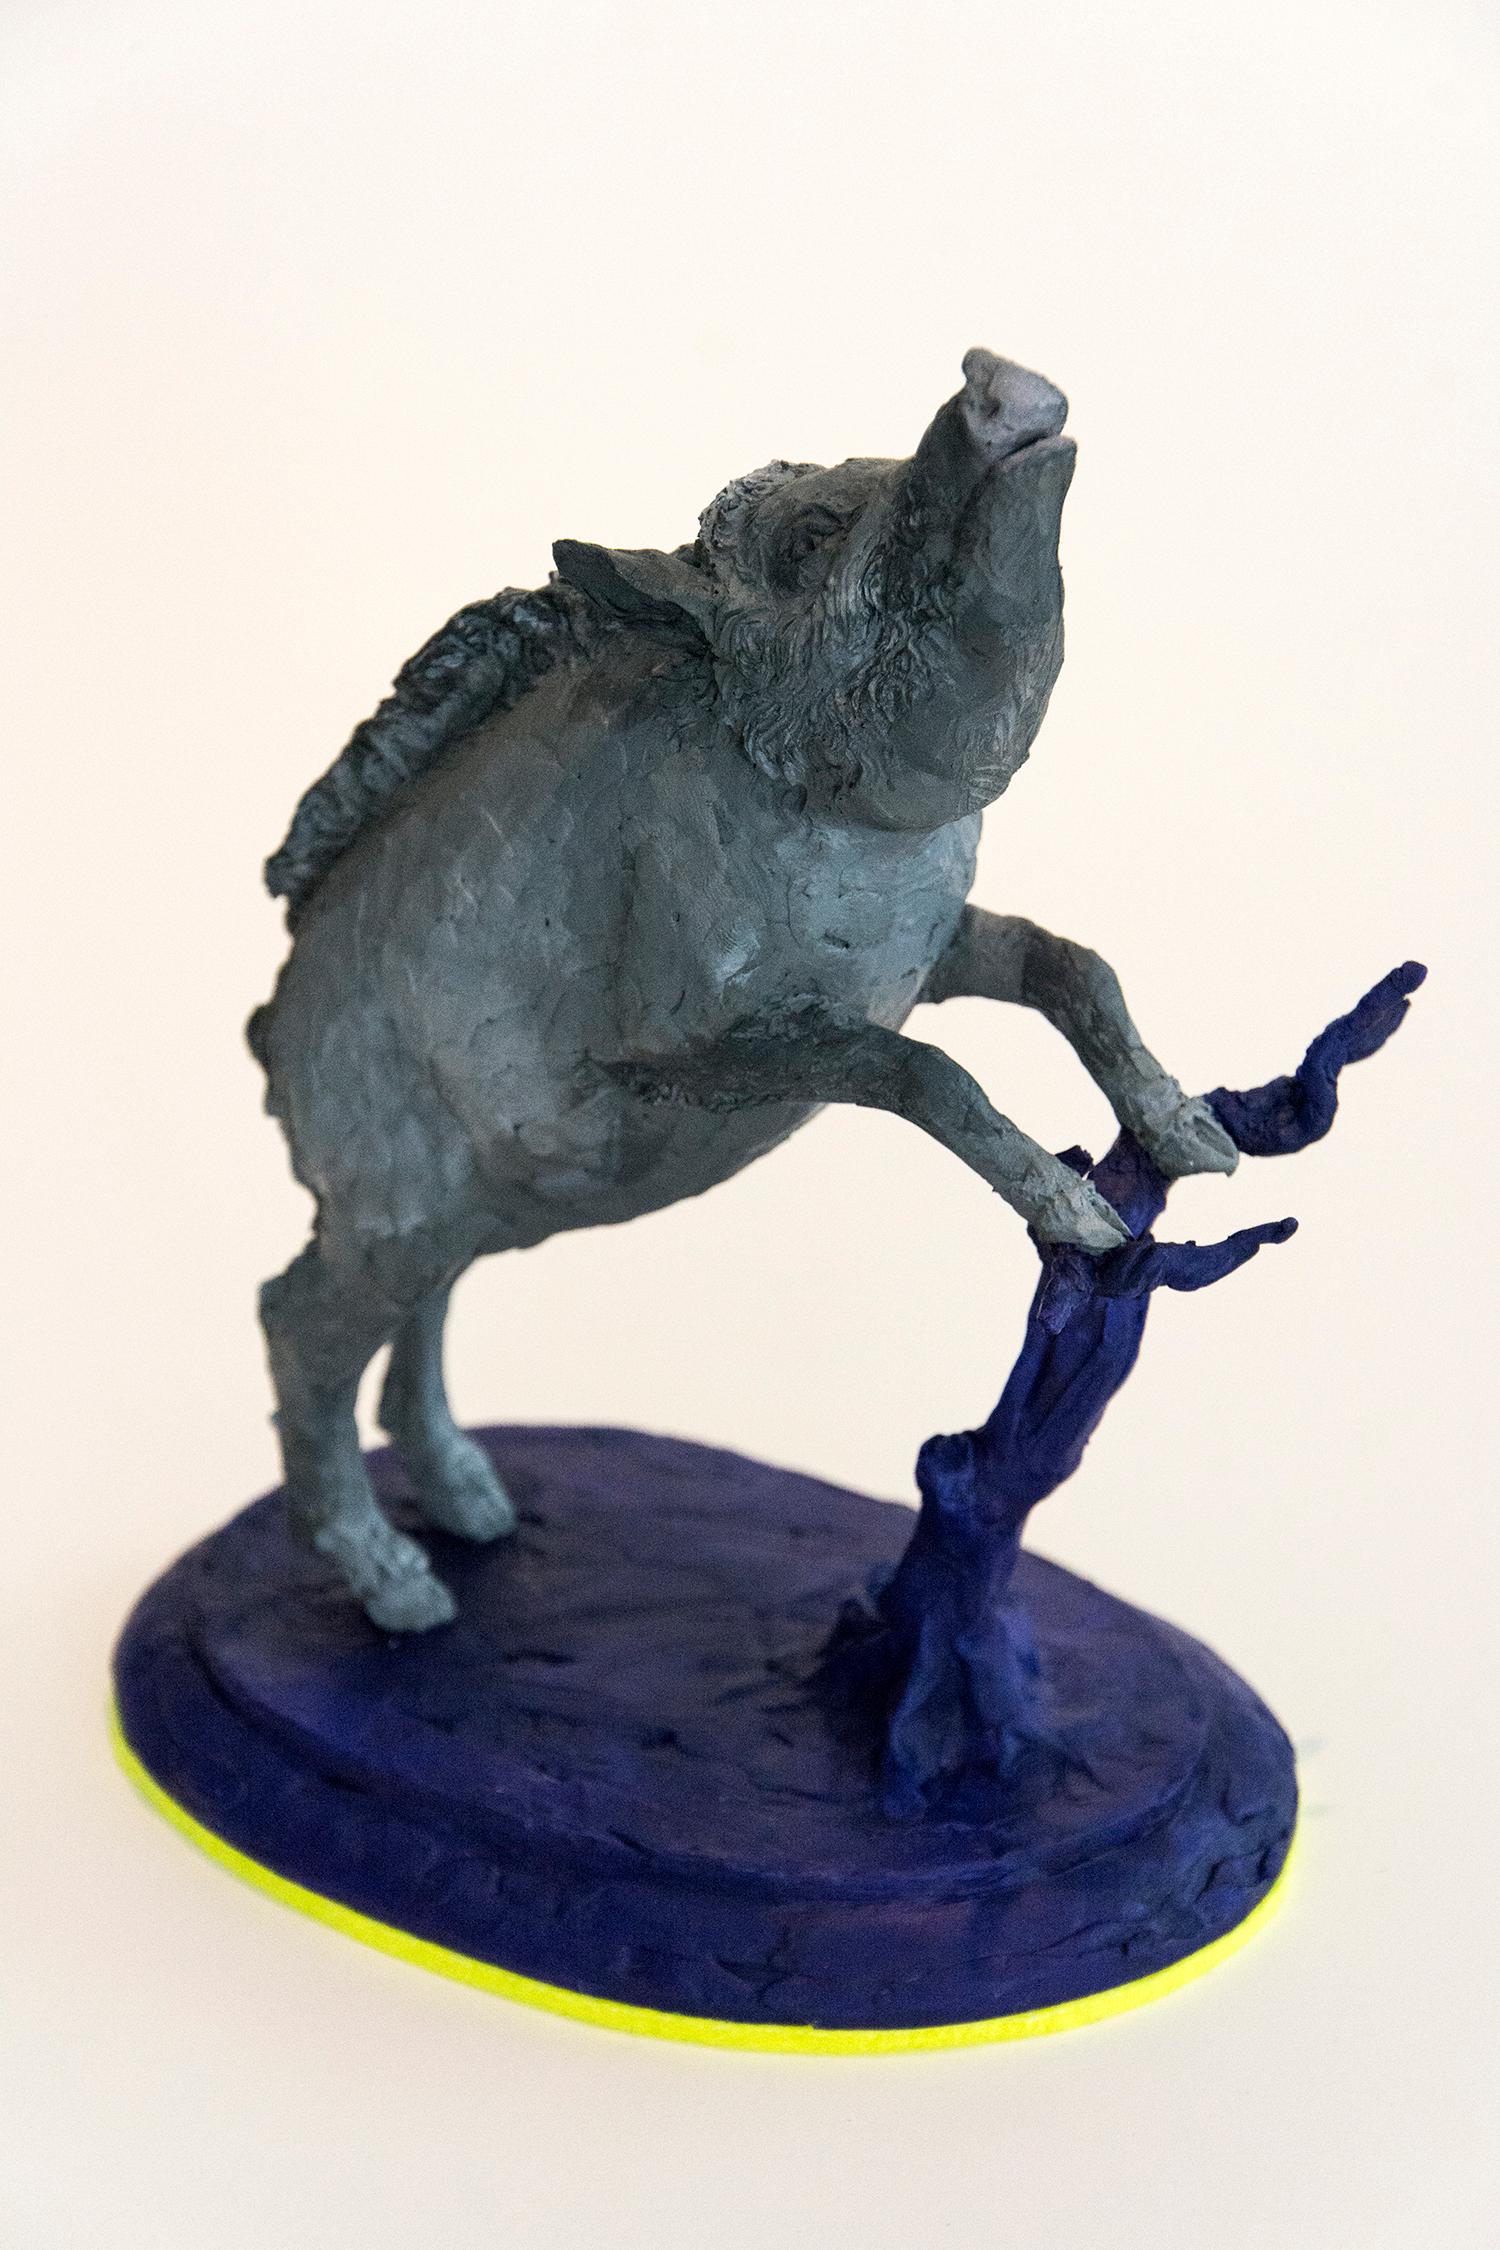 Boar 2/8 - small, grey, blue, figurative, animal, cast resin, tabletop sculpture - Sculpture by Nicholas Crombach